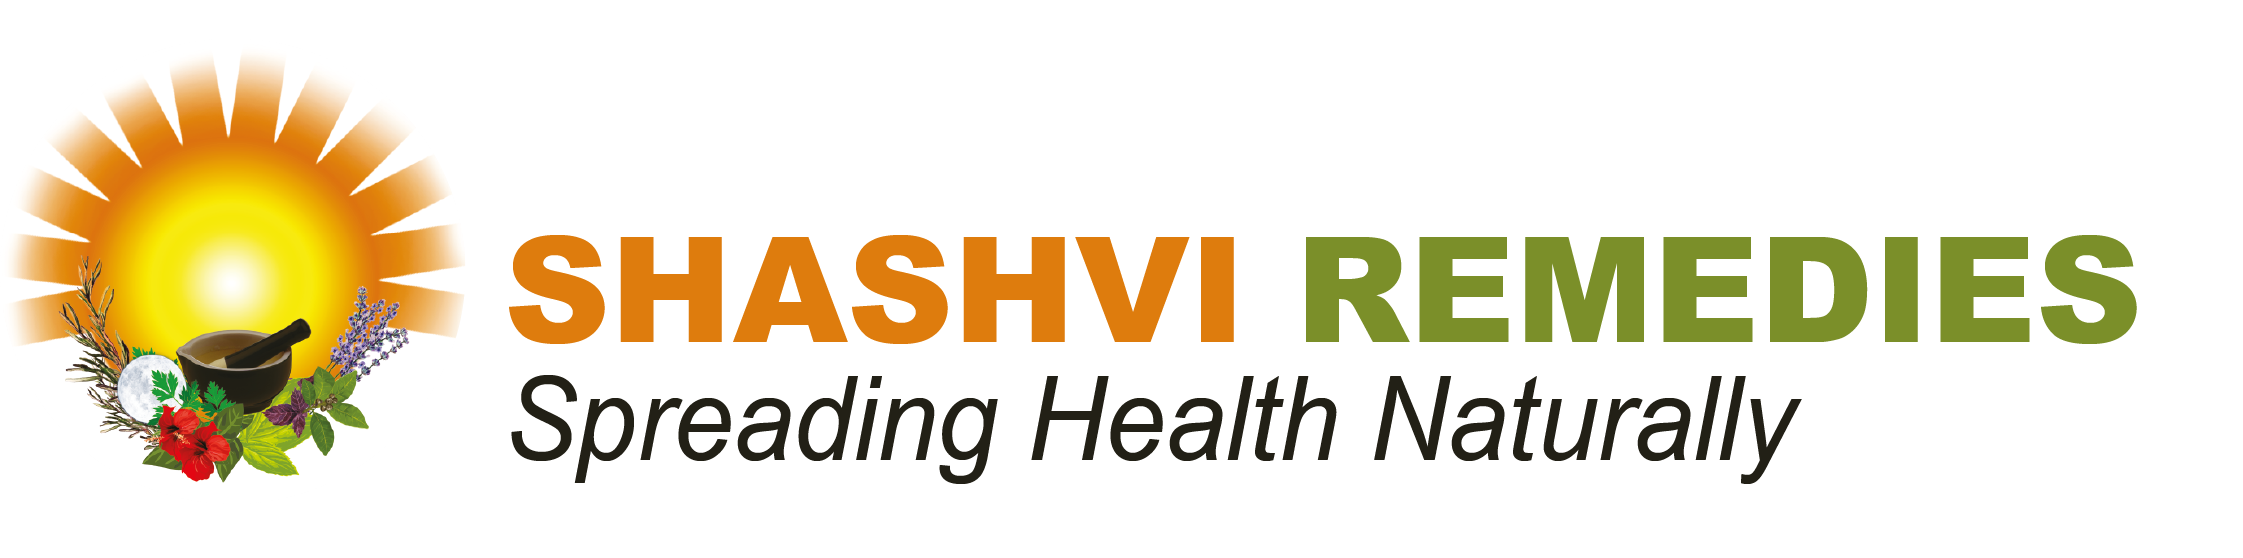 Ayurvedic Medicine in Mumbai | Ayurvedic Medicine in India